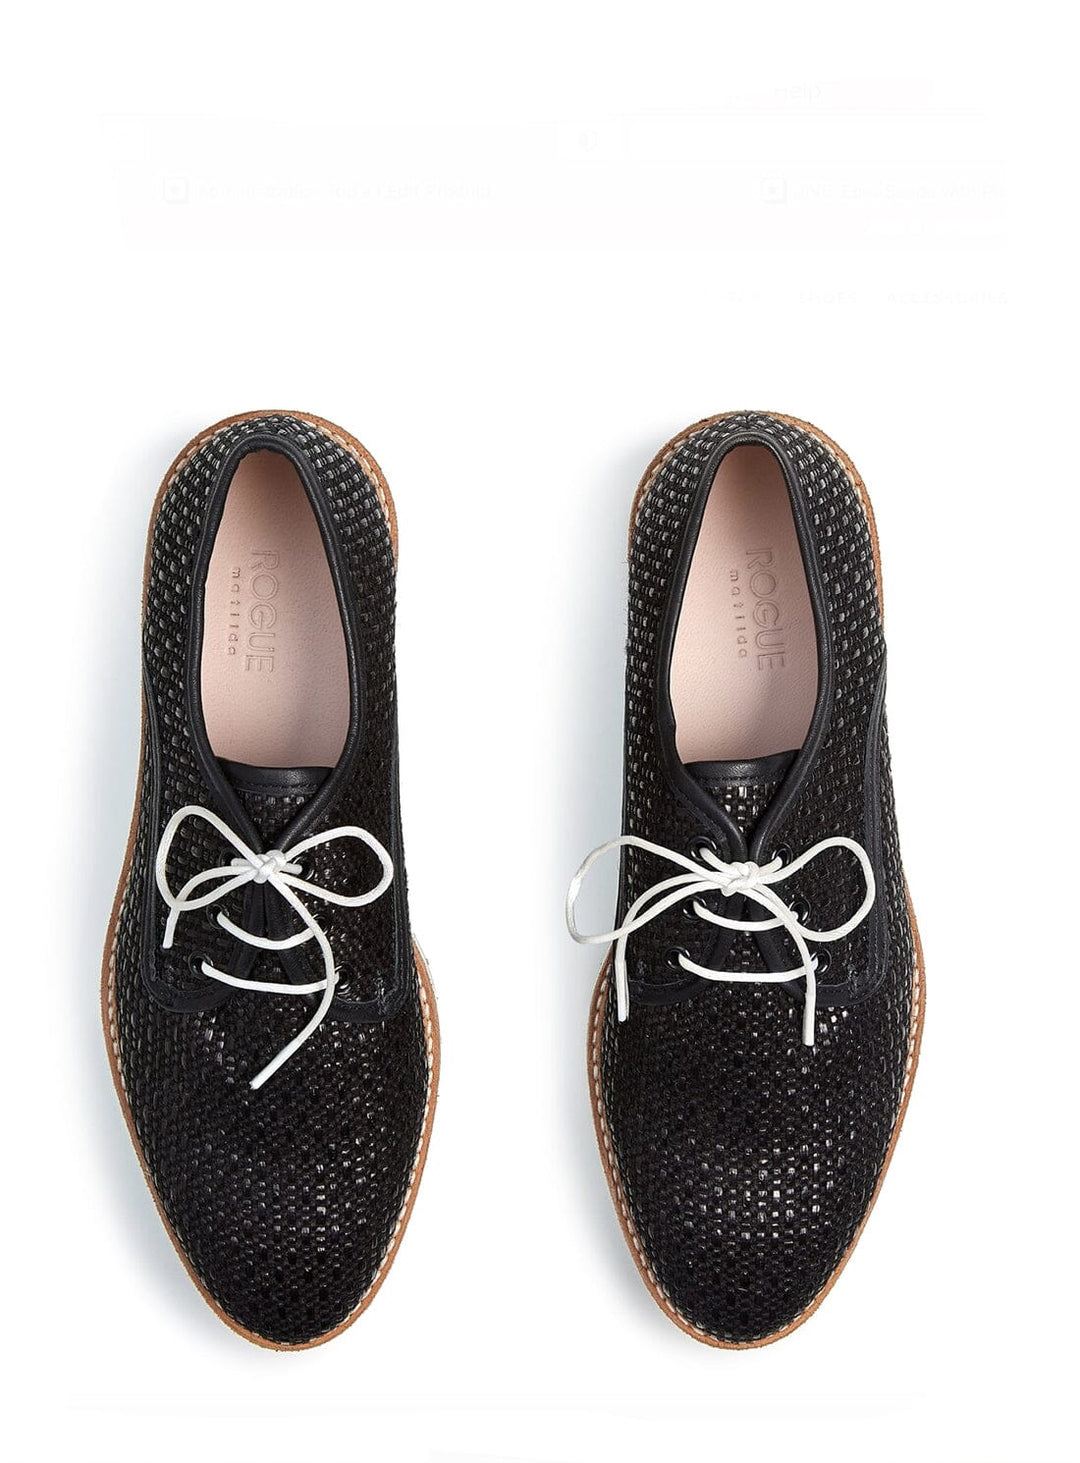 Maxi Flatform Brogue in Black Raffia Shoes YBDFinds 